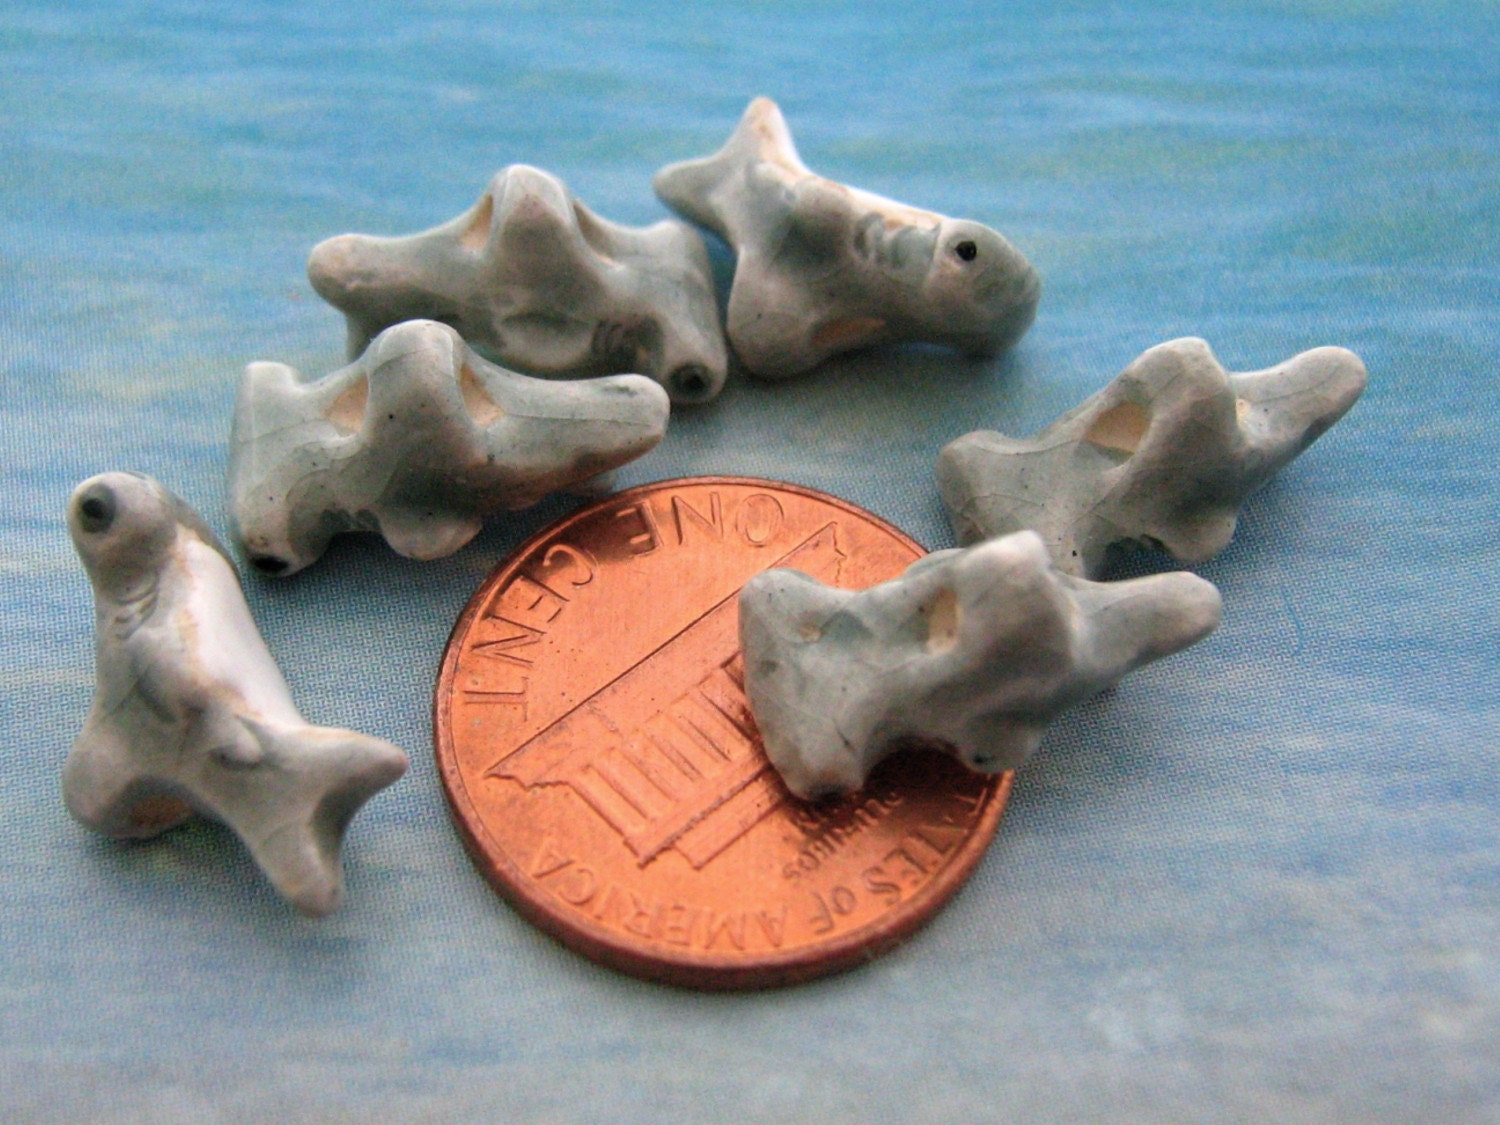 4 Tiny Hammerhead shark beads from TheCraftyBead on Etsy Studio